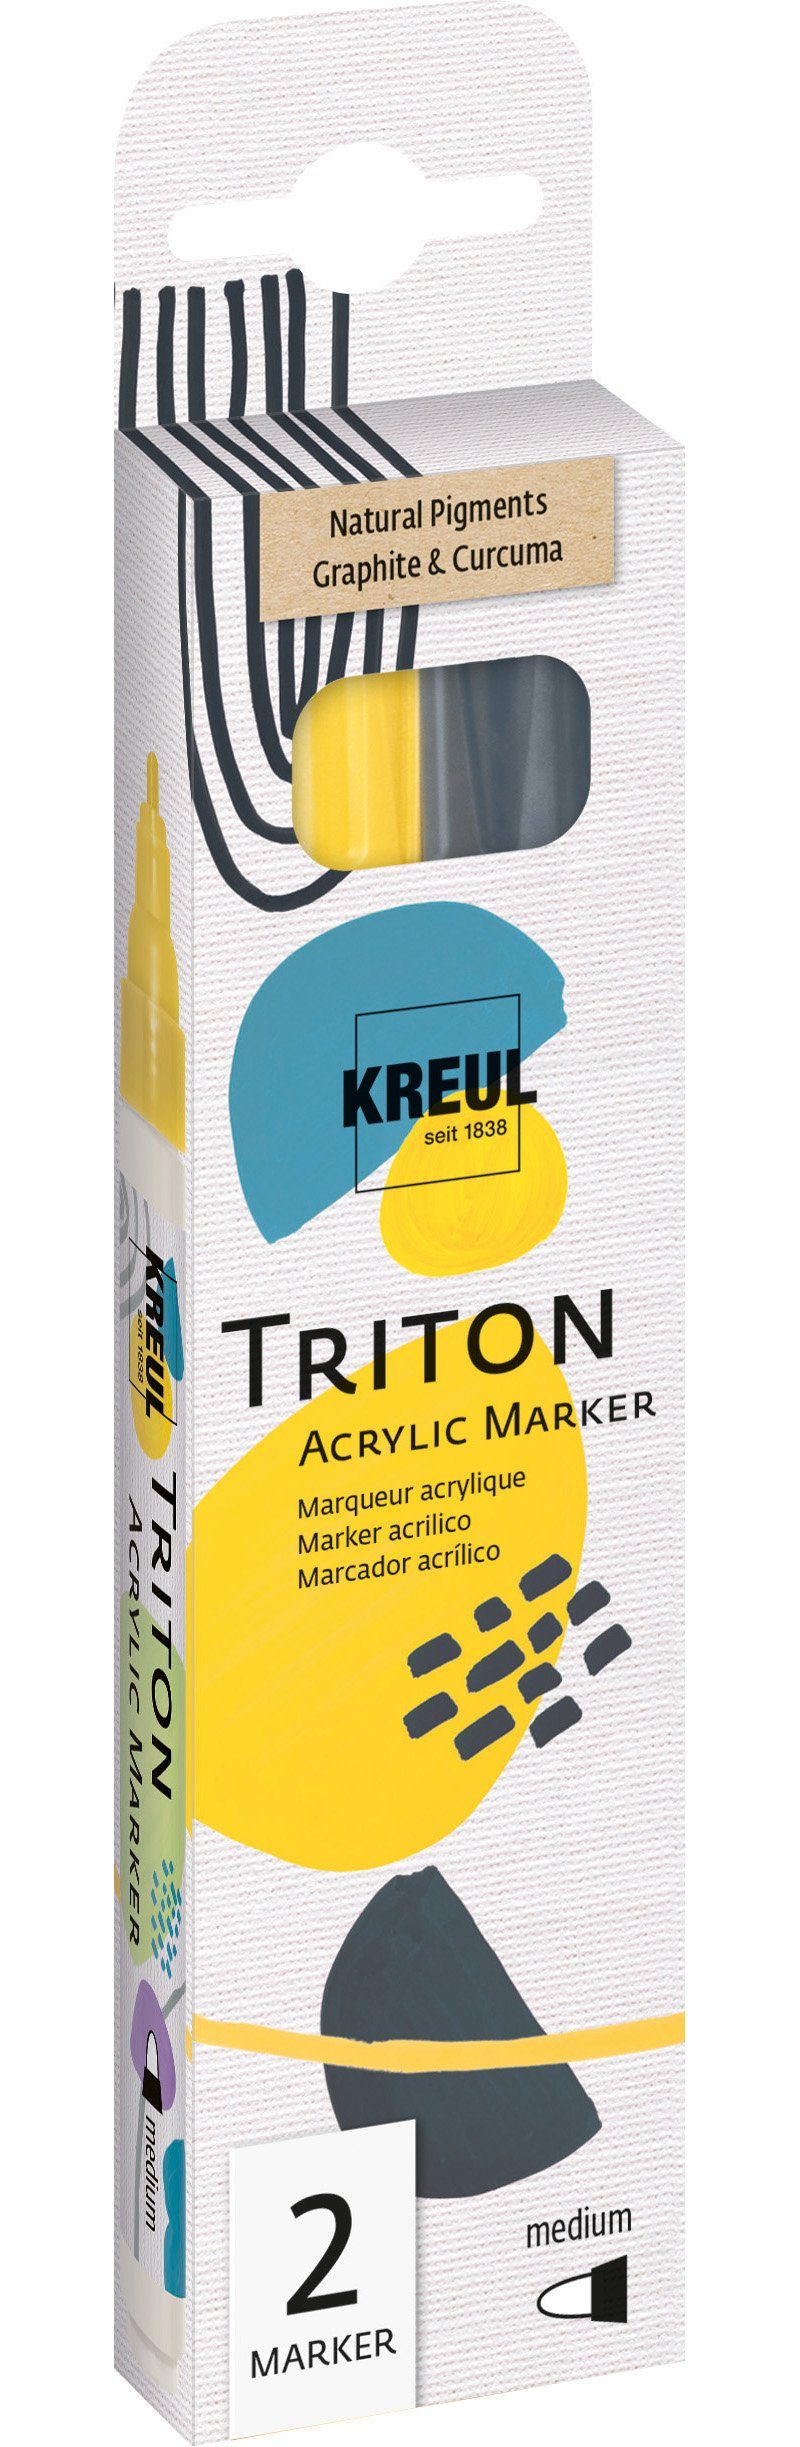 Kreul Marker Pigments, 2 Stück Natural